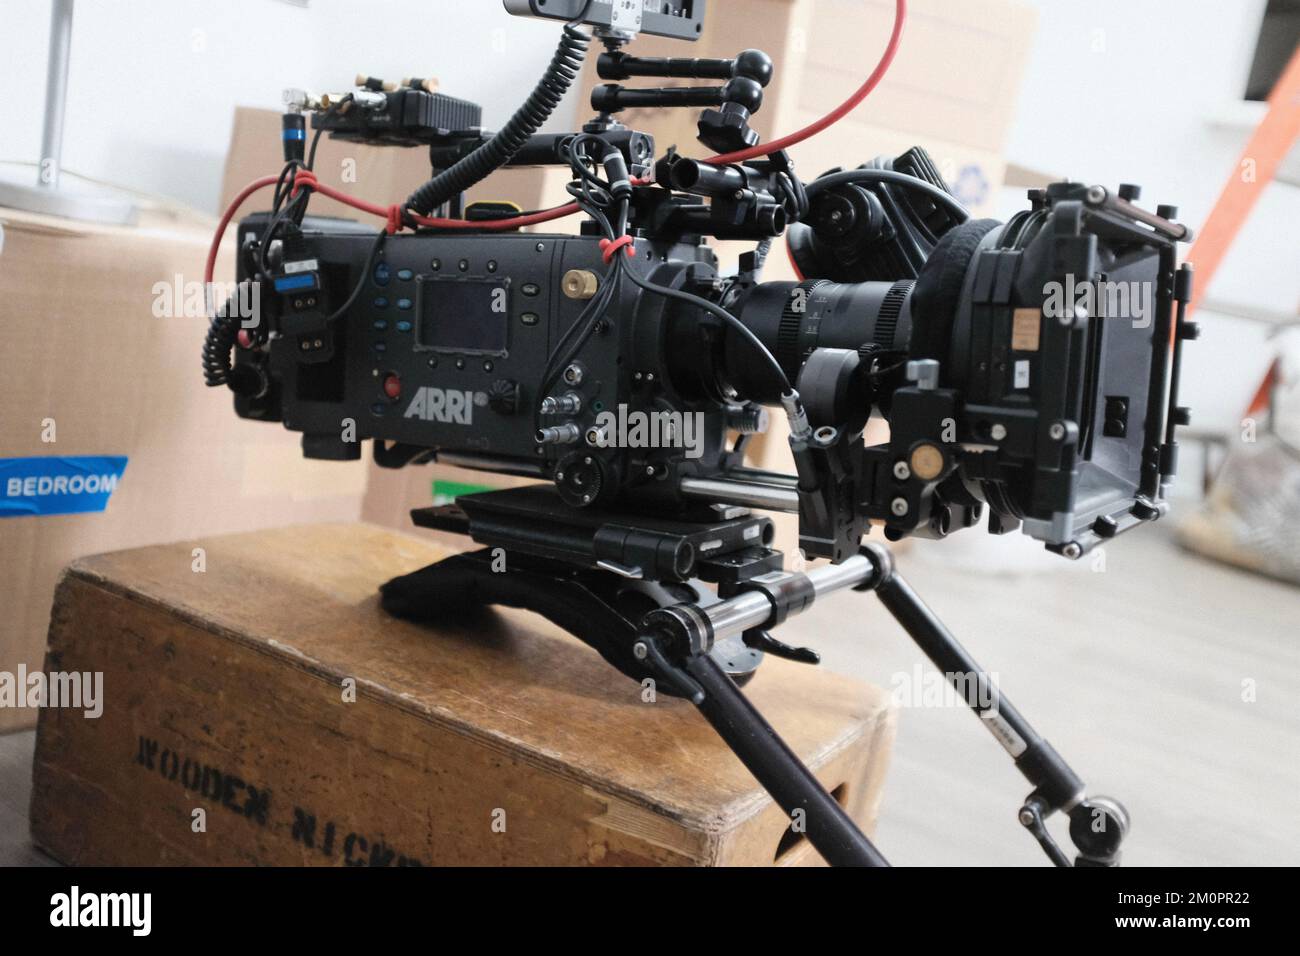 The Arri Alexa Classic cinema camera in handheld configuration on a film shoot Stock Photo